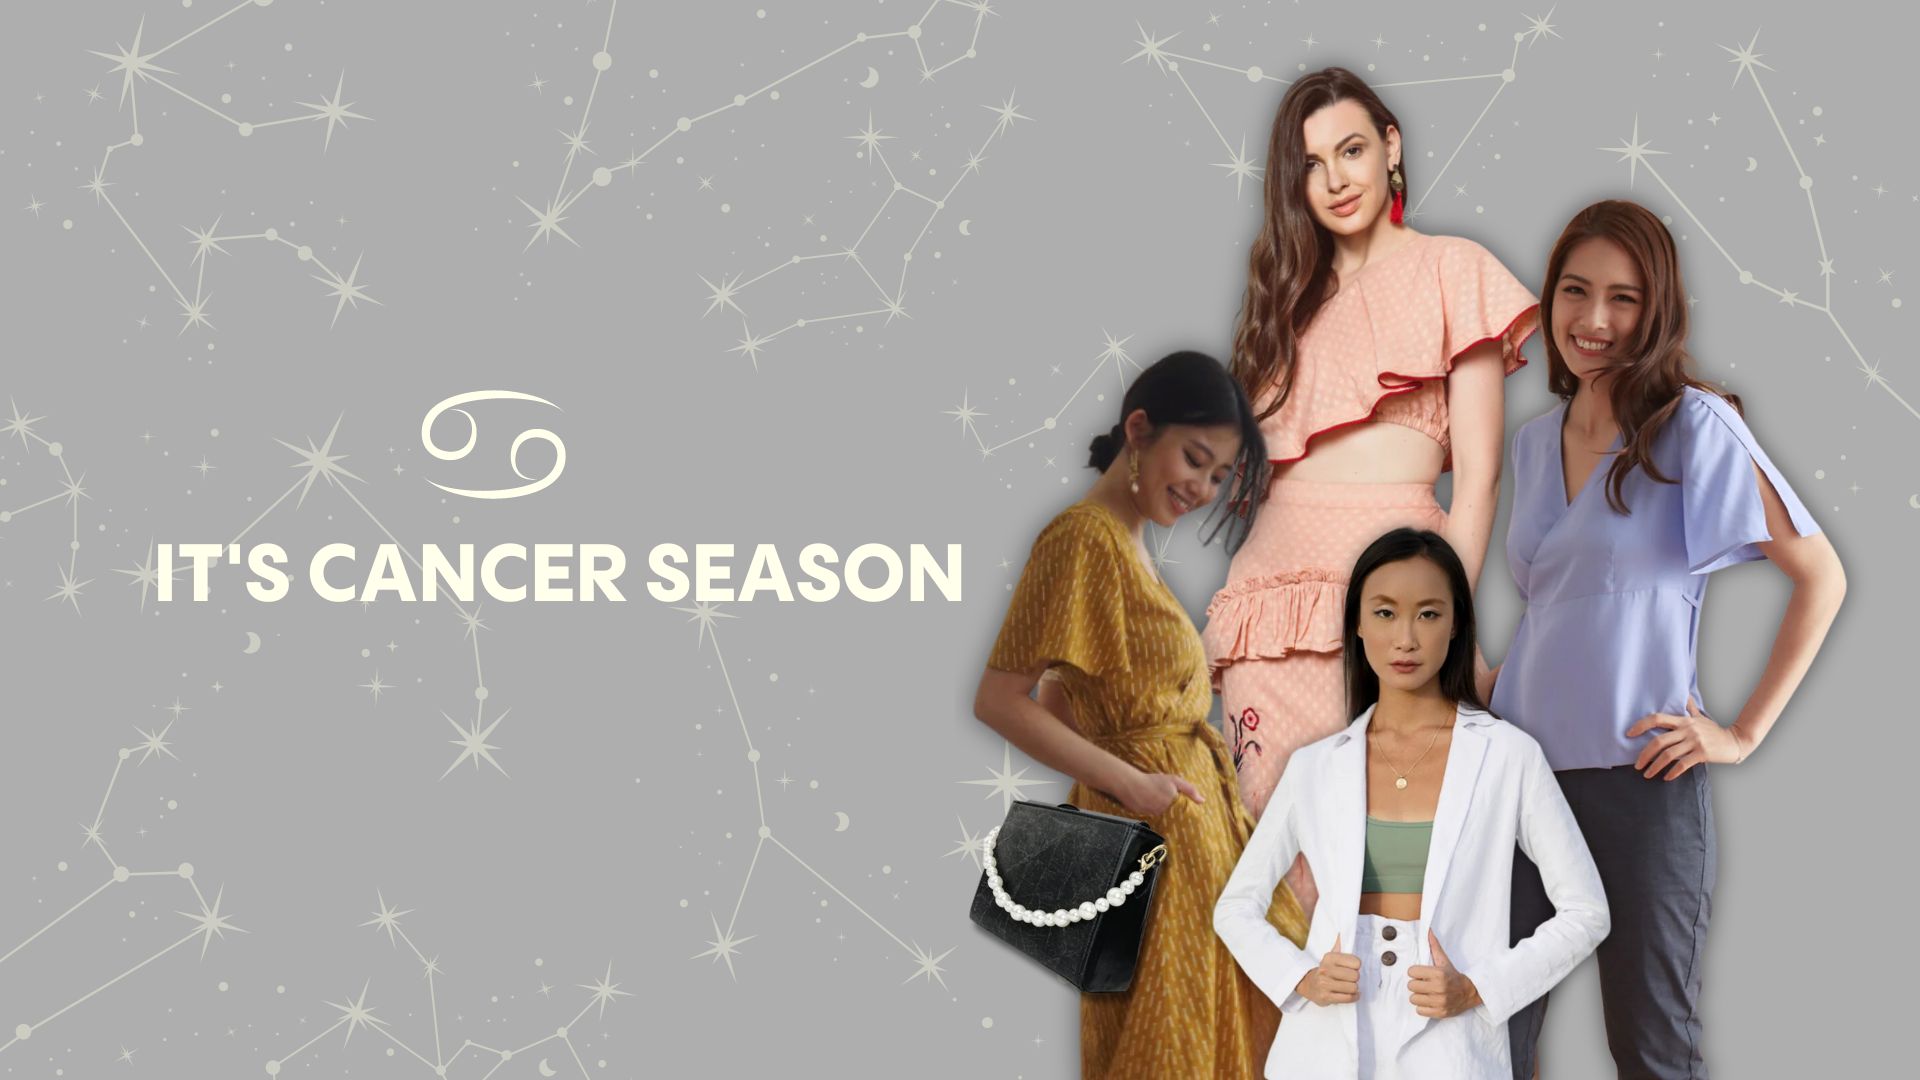 Horoscope & Trends: Cancer Season